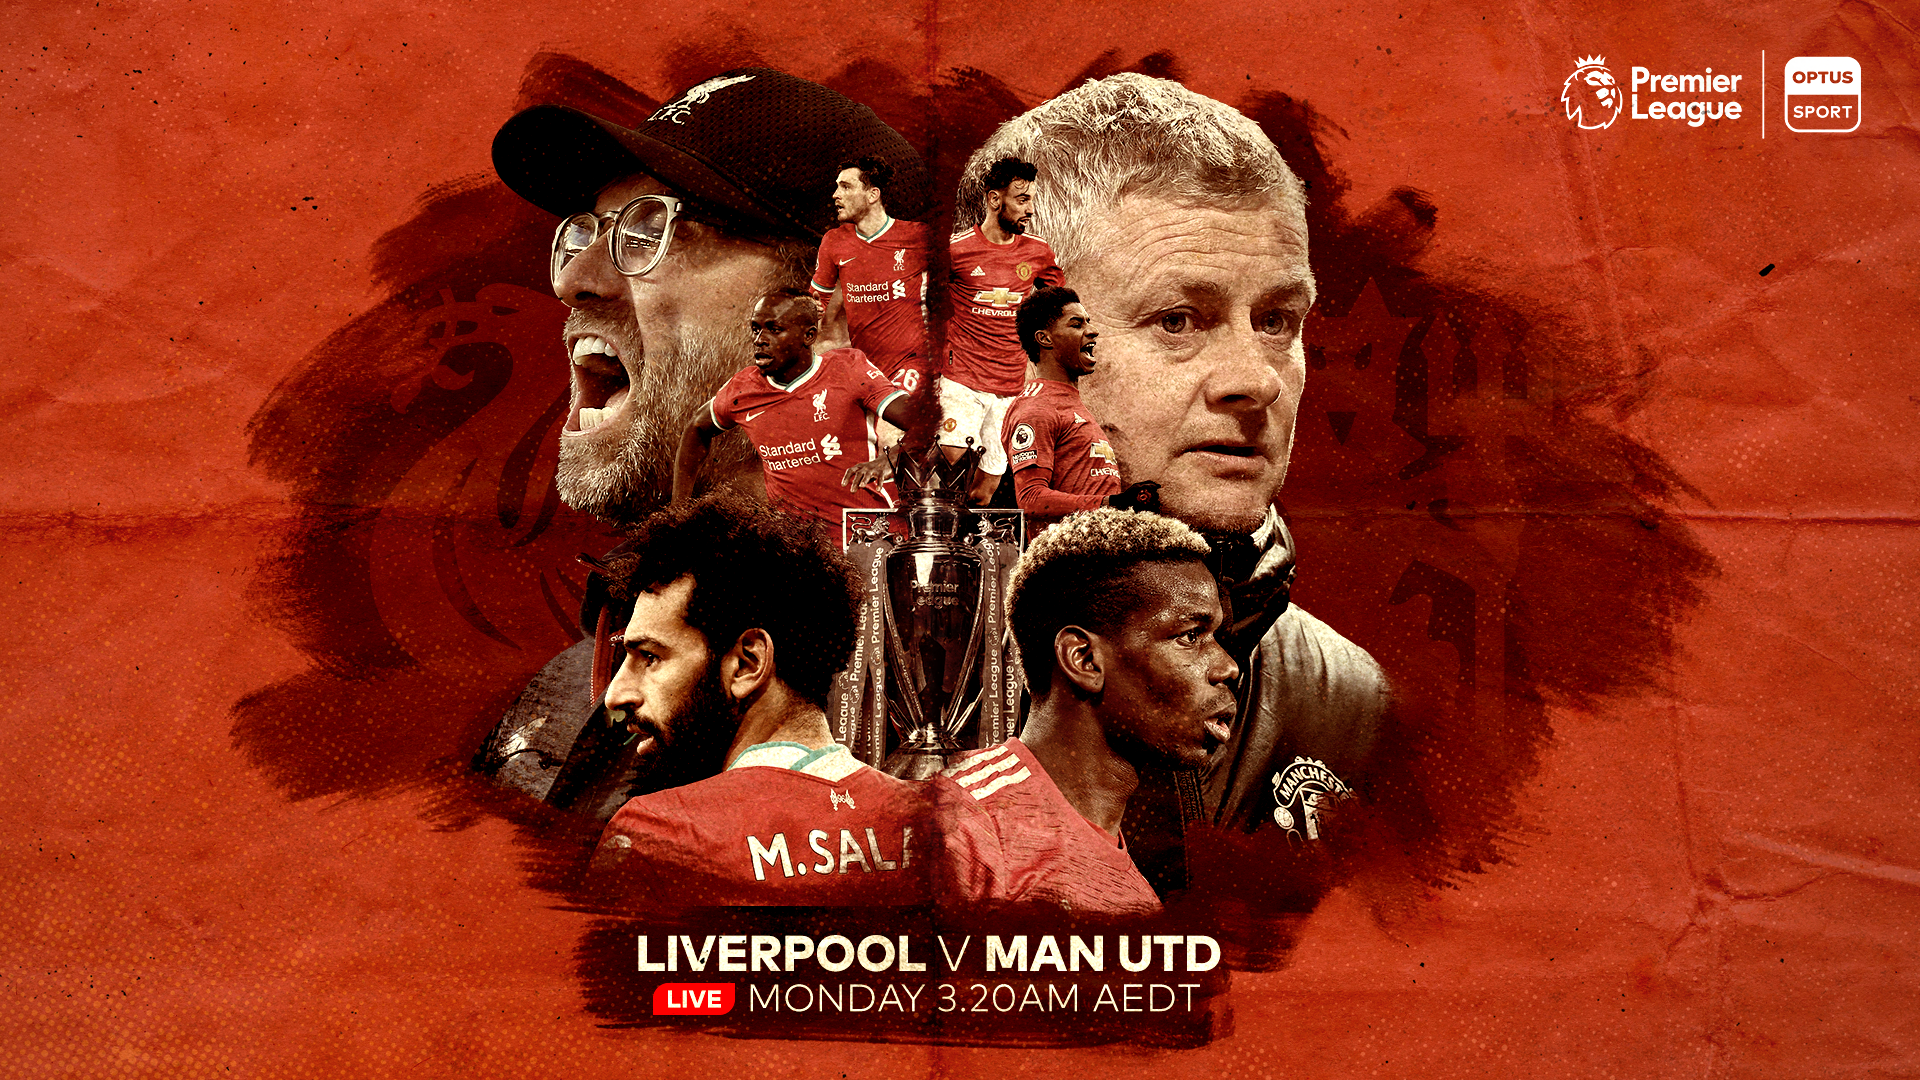 Liverpool Vs Man United Wallpaper 2021 Manchester United 2020 21 Home Kit Colours Design Leaked liverpool celebrates v man city image